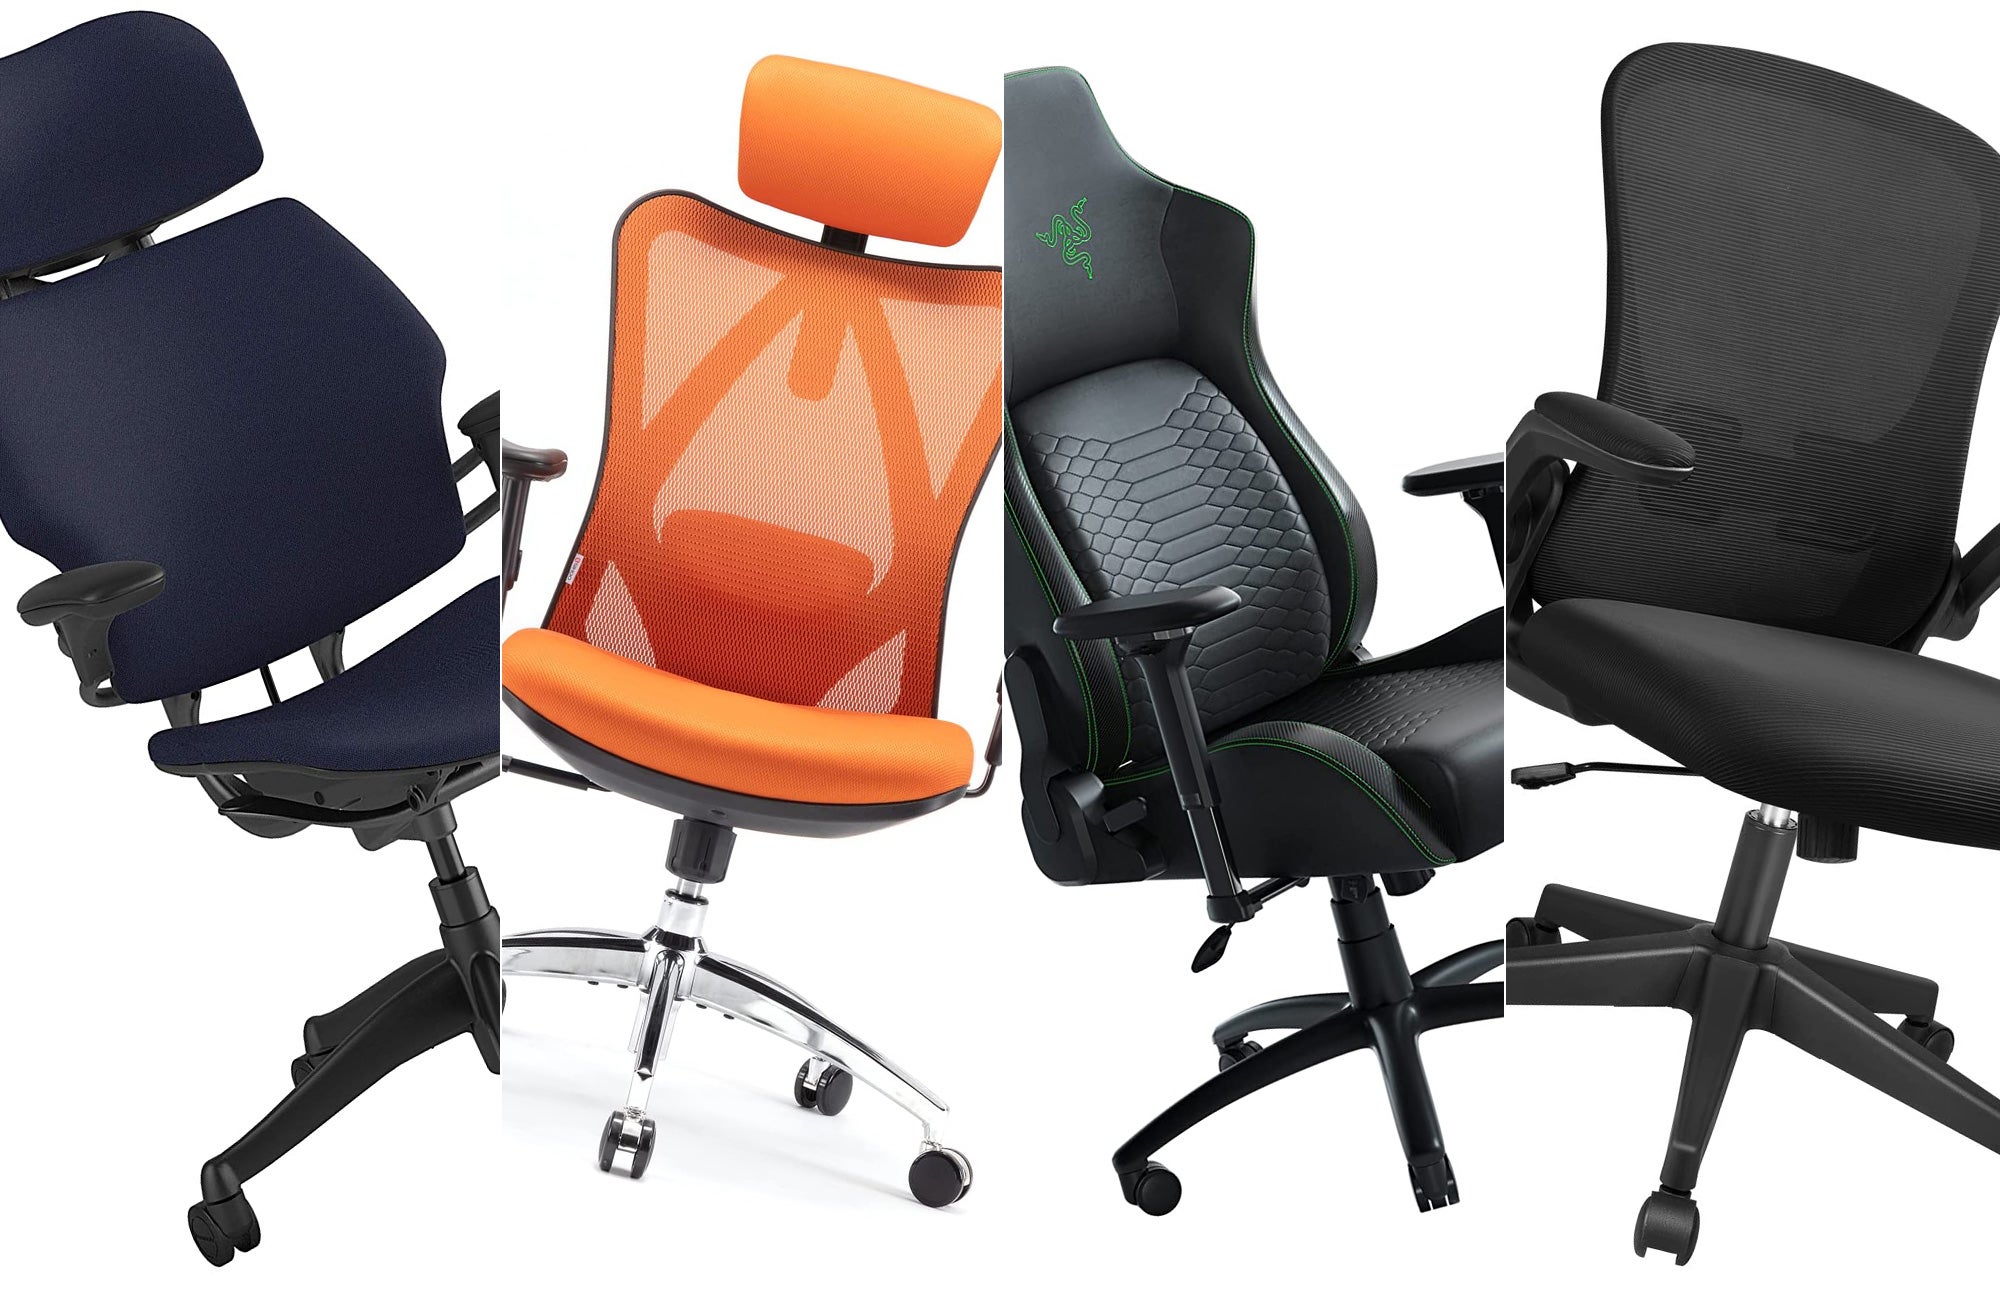 https://www.popsci.com/uploads/2023/03/16/best-office-chairs-for-lumbar-support.jpg?auto=webp